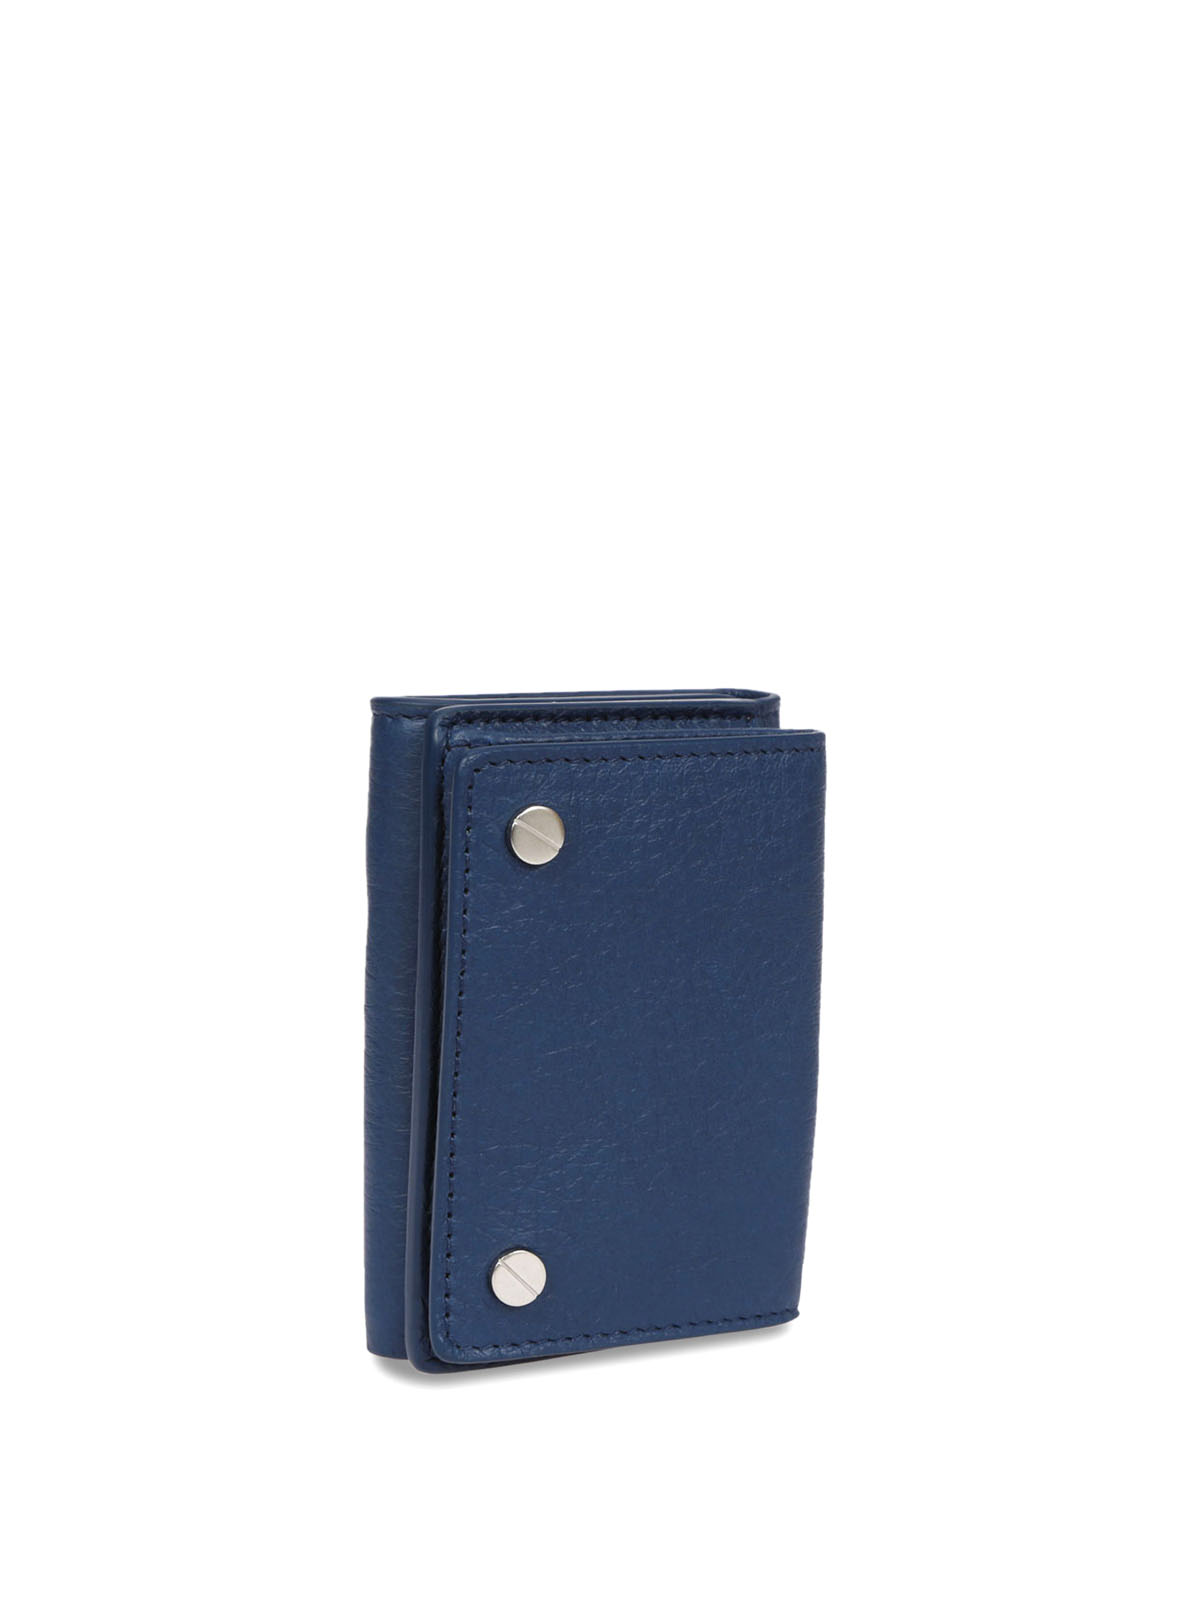 Wallets & purses - Vintage leather wallet 459069DB9H44222